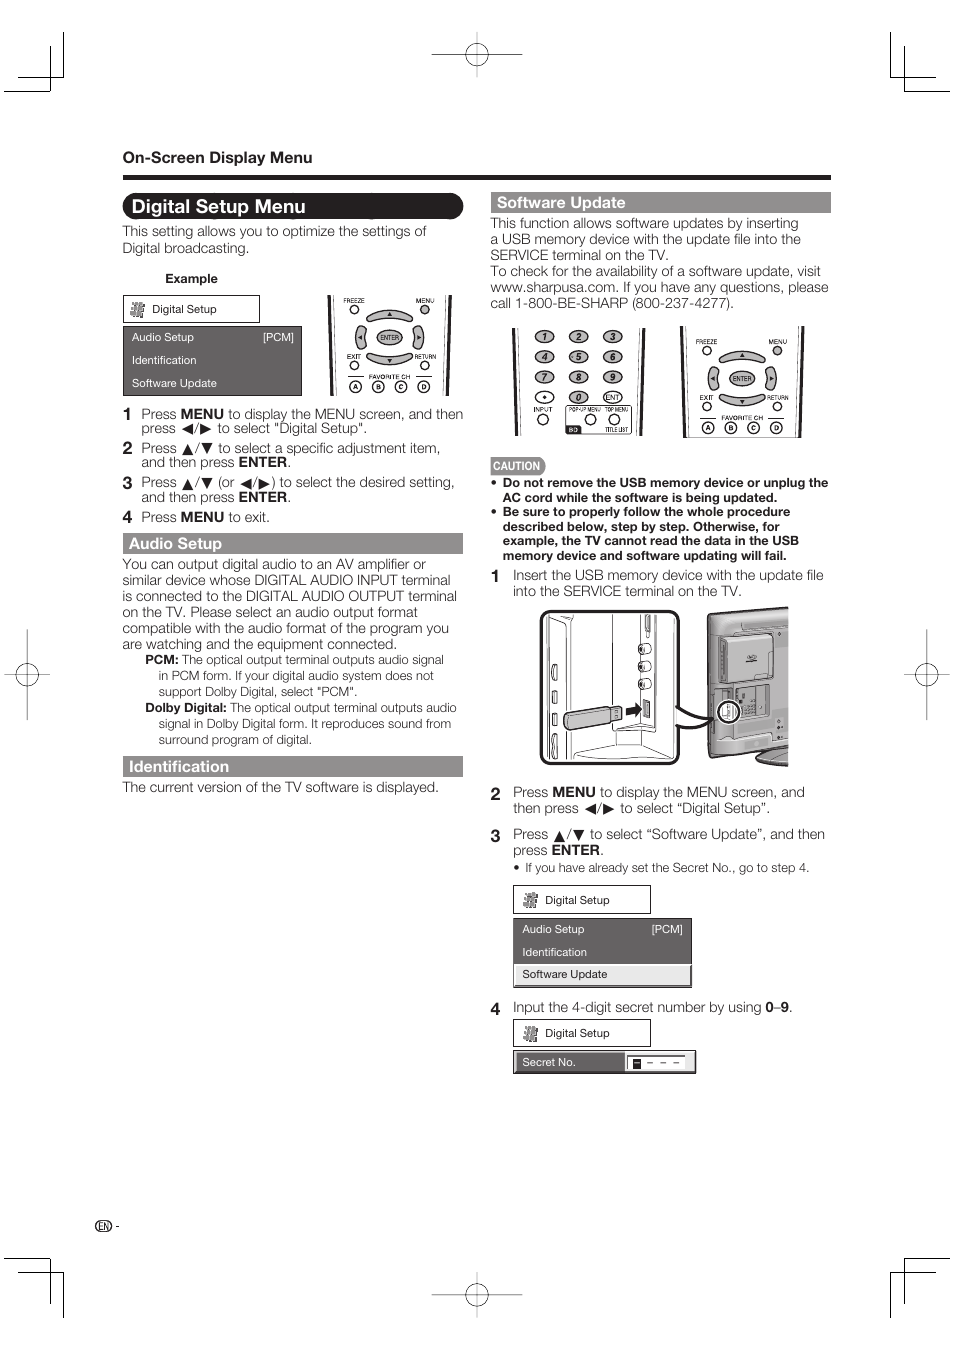 Digital setup menu, Audio setup, Identification | Software update | Sharp Aquos LC 46BD80UN User Manual | Page 48 / 65